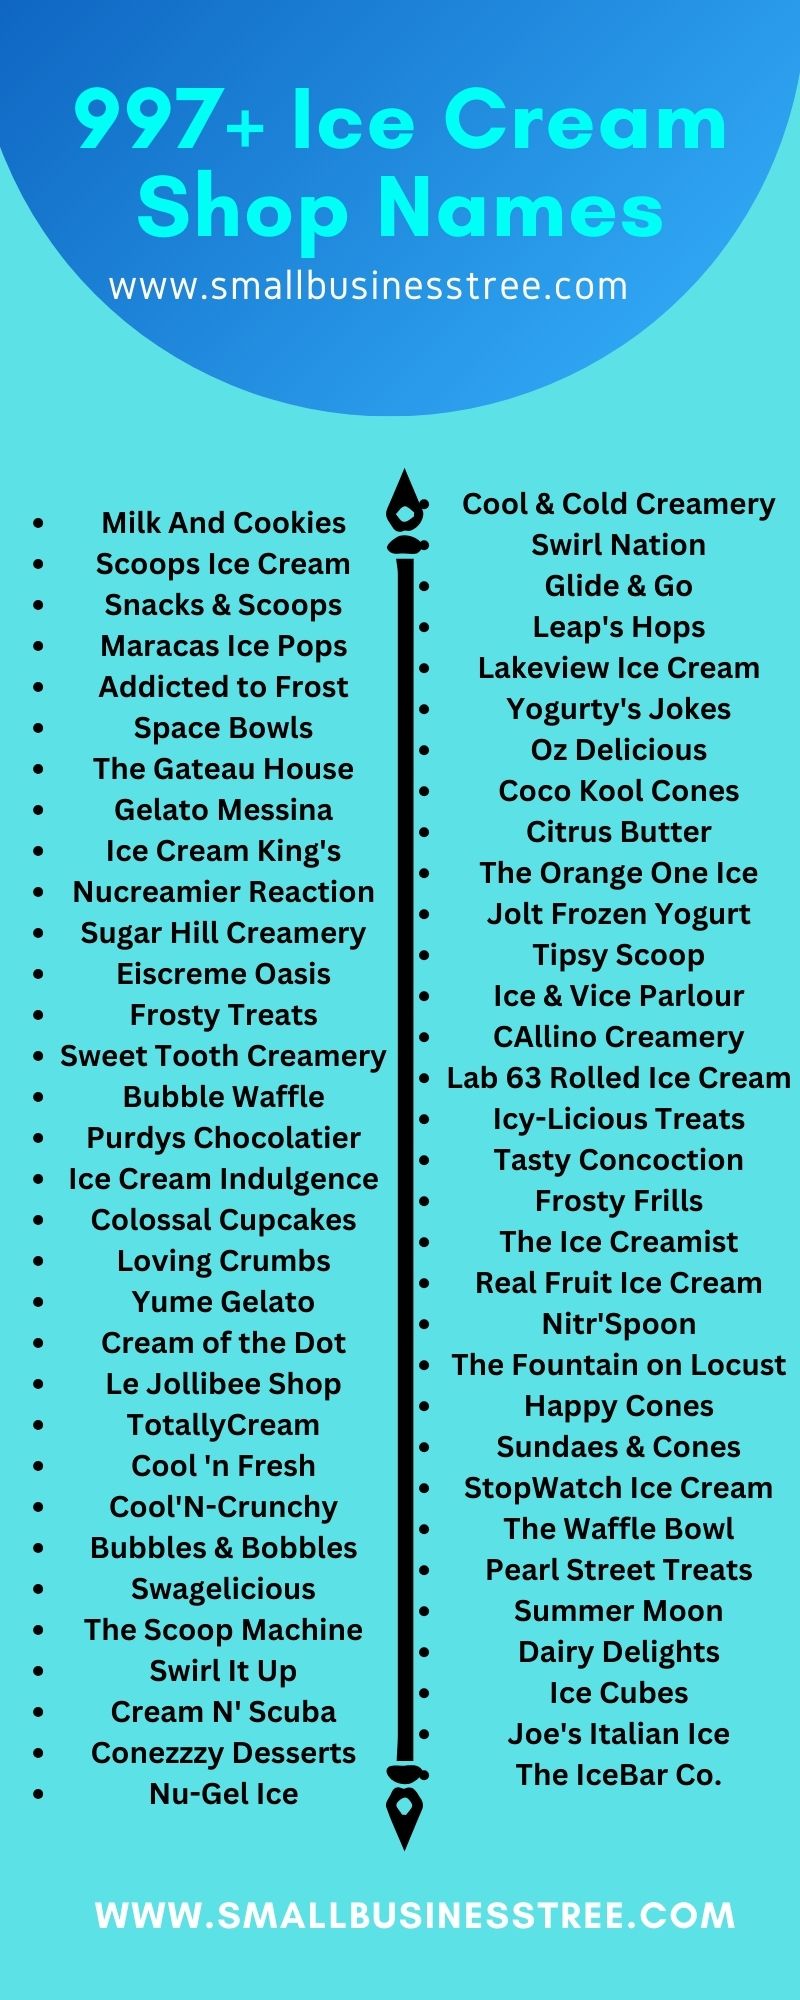 Ice Cream Shop Name List